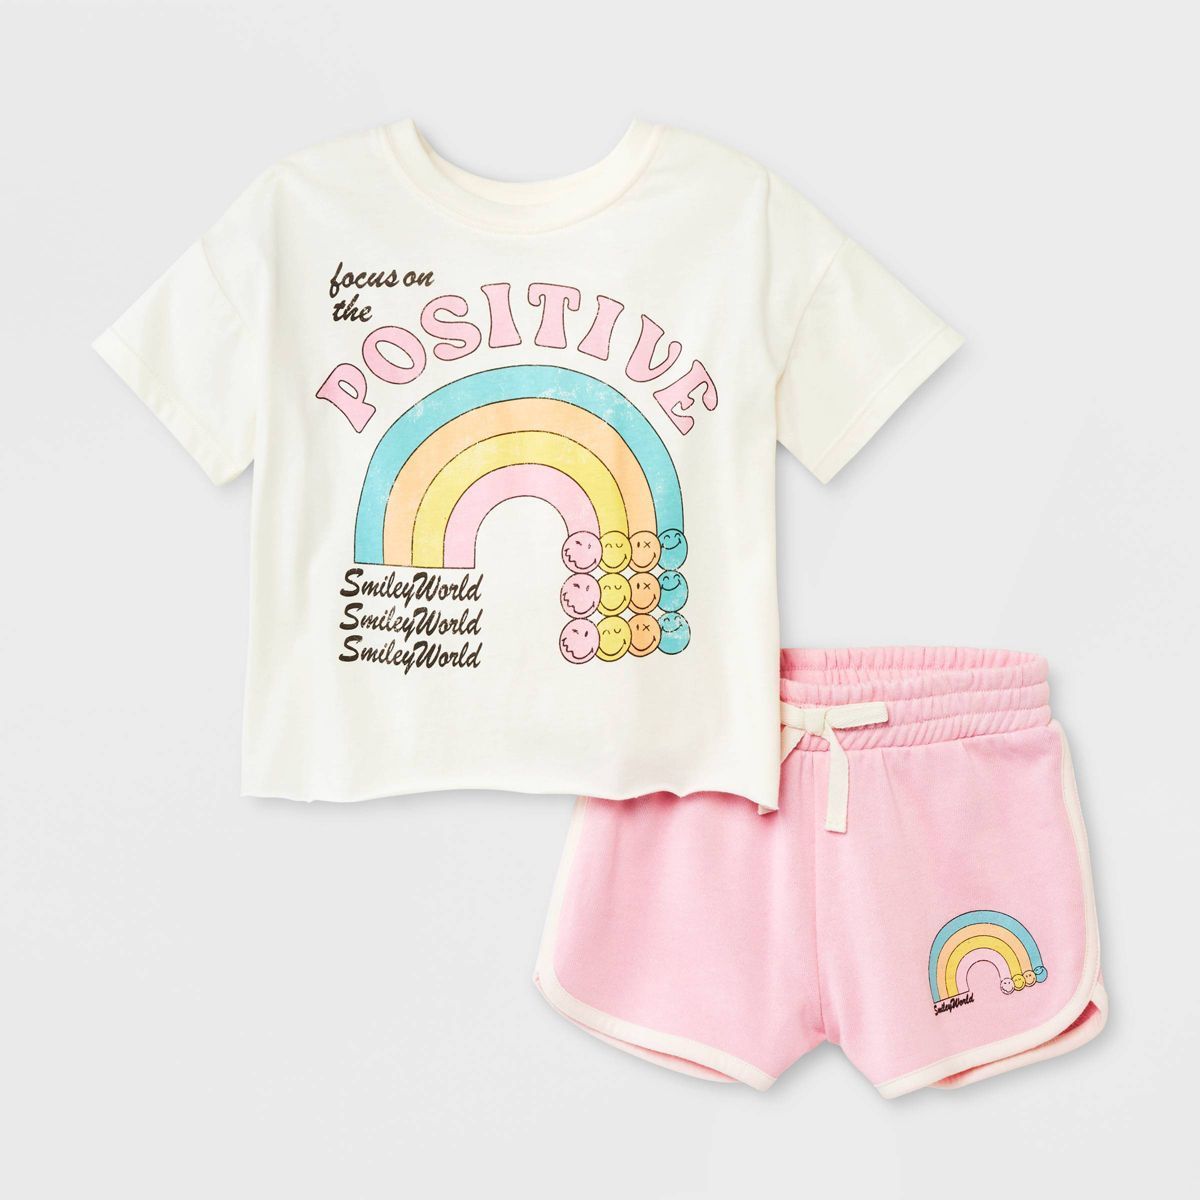 Toddler Girls' SmileyWorld Top and Bottom Set - White 2T | Target